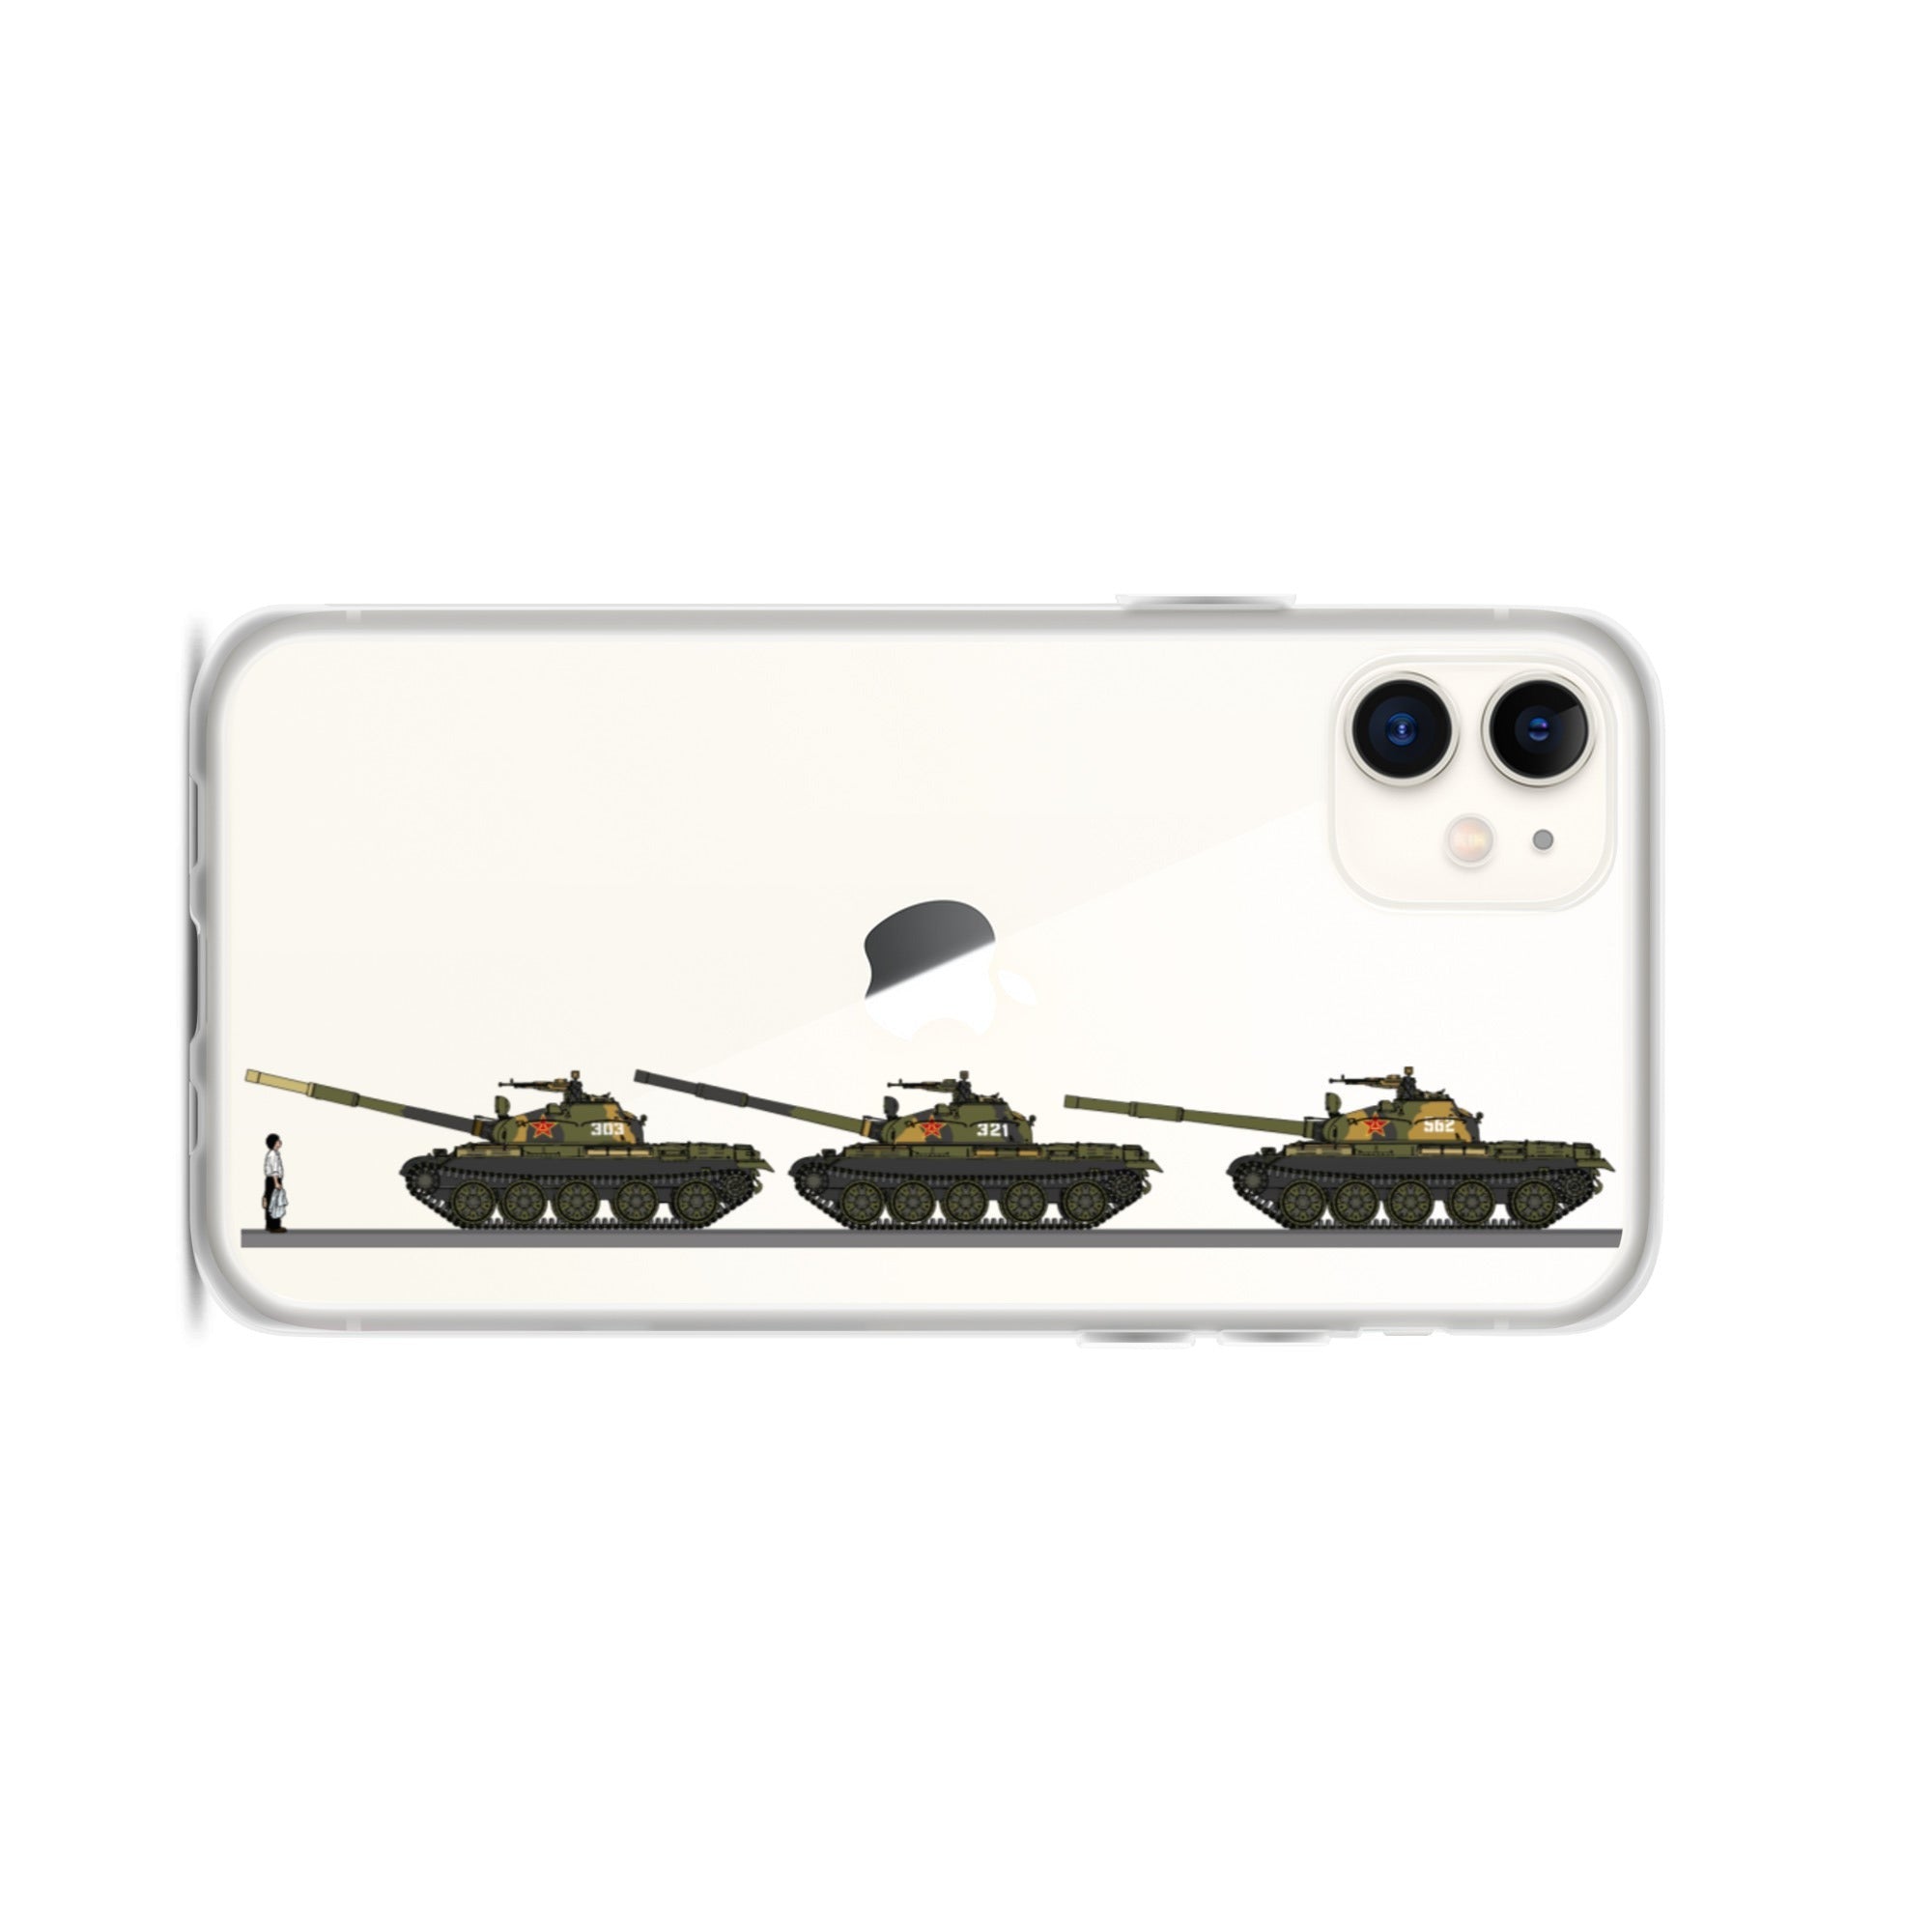 Tiananmen Tank Man Mug Black 33rd Anniversary iPhone Case